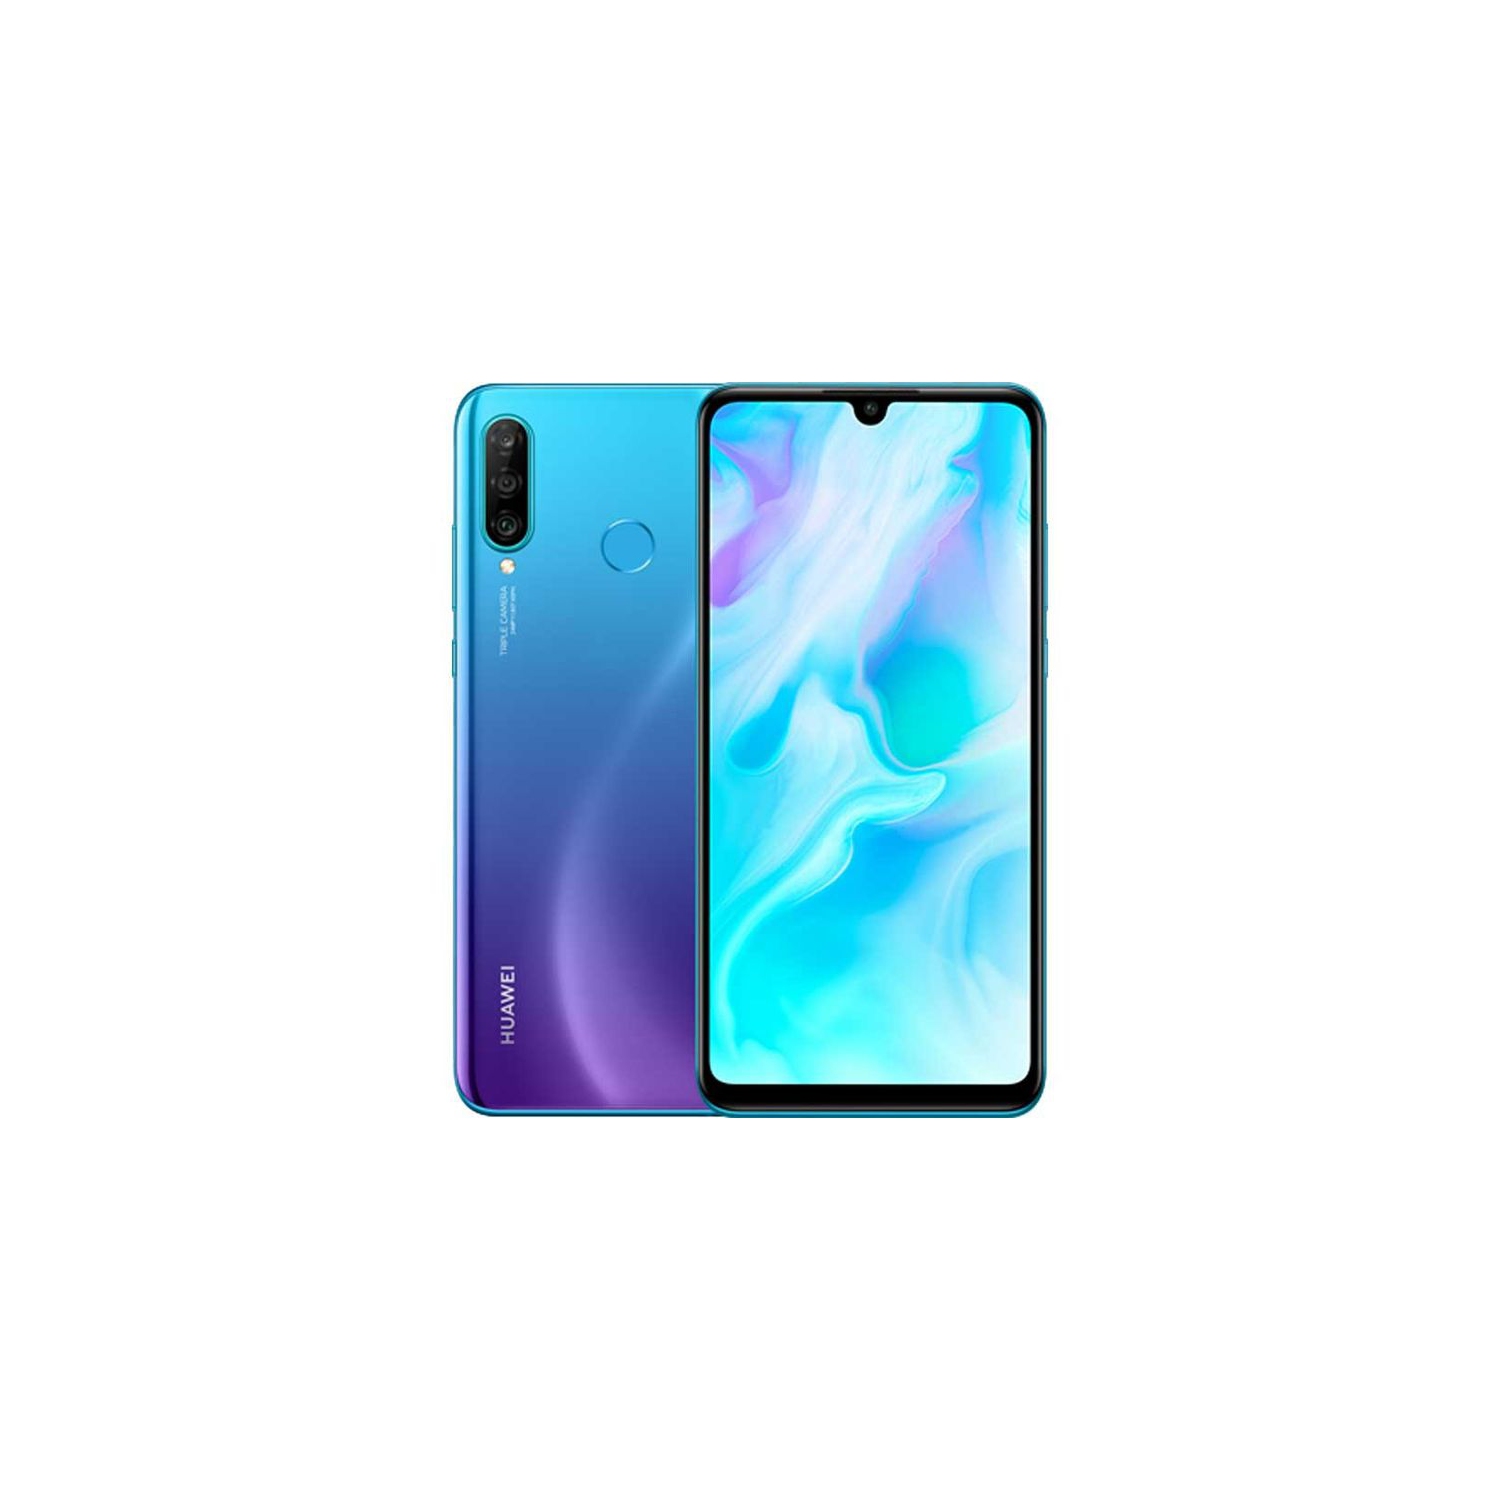 Huawei P30 Lite 256GB/6GB RAM Dual Sim Smartphone - Unlocked - Peacock Blue